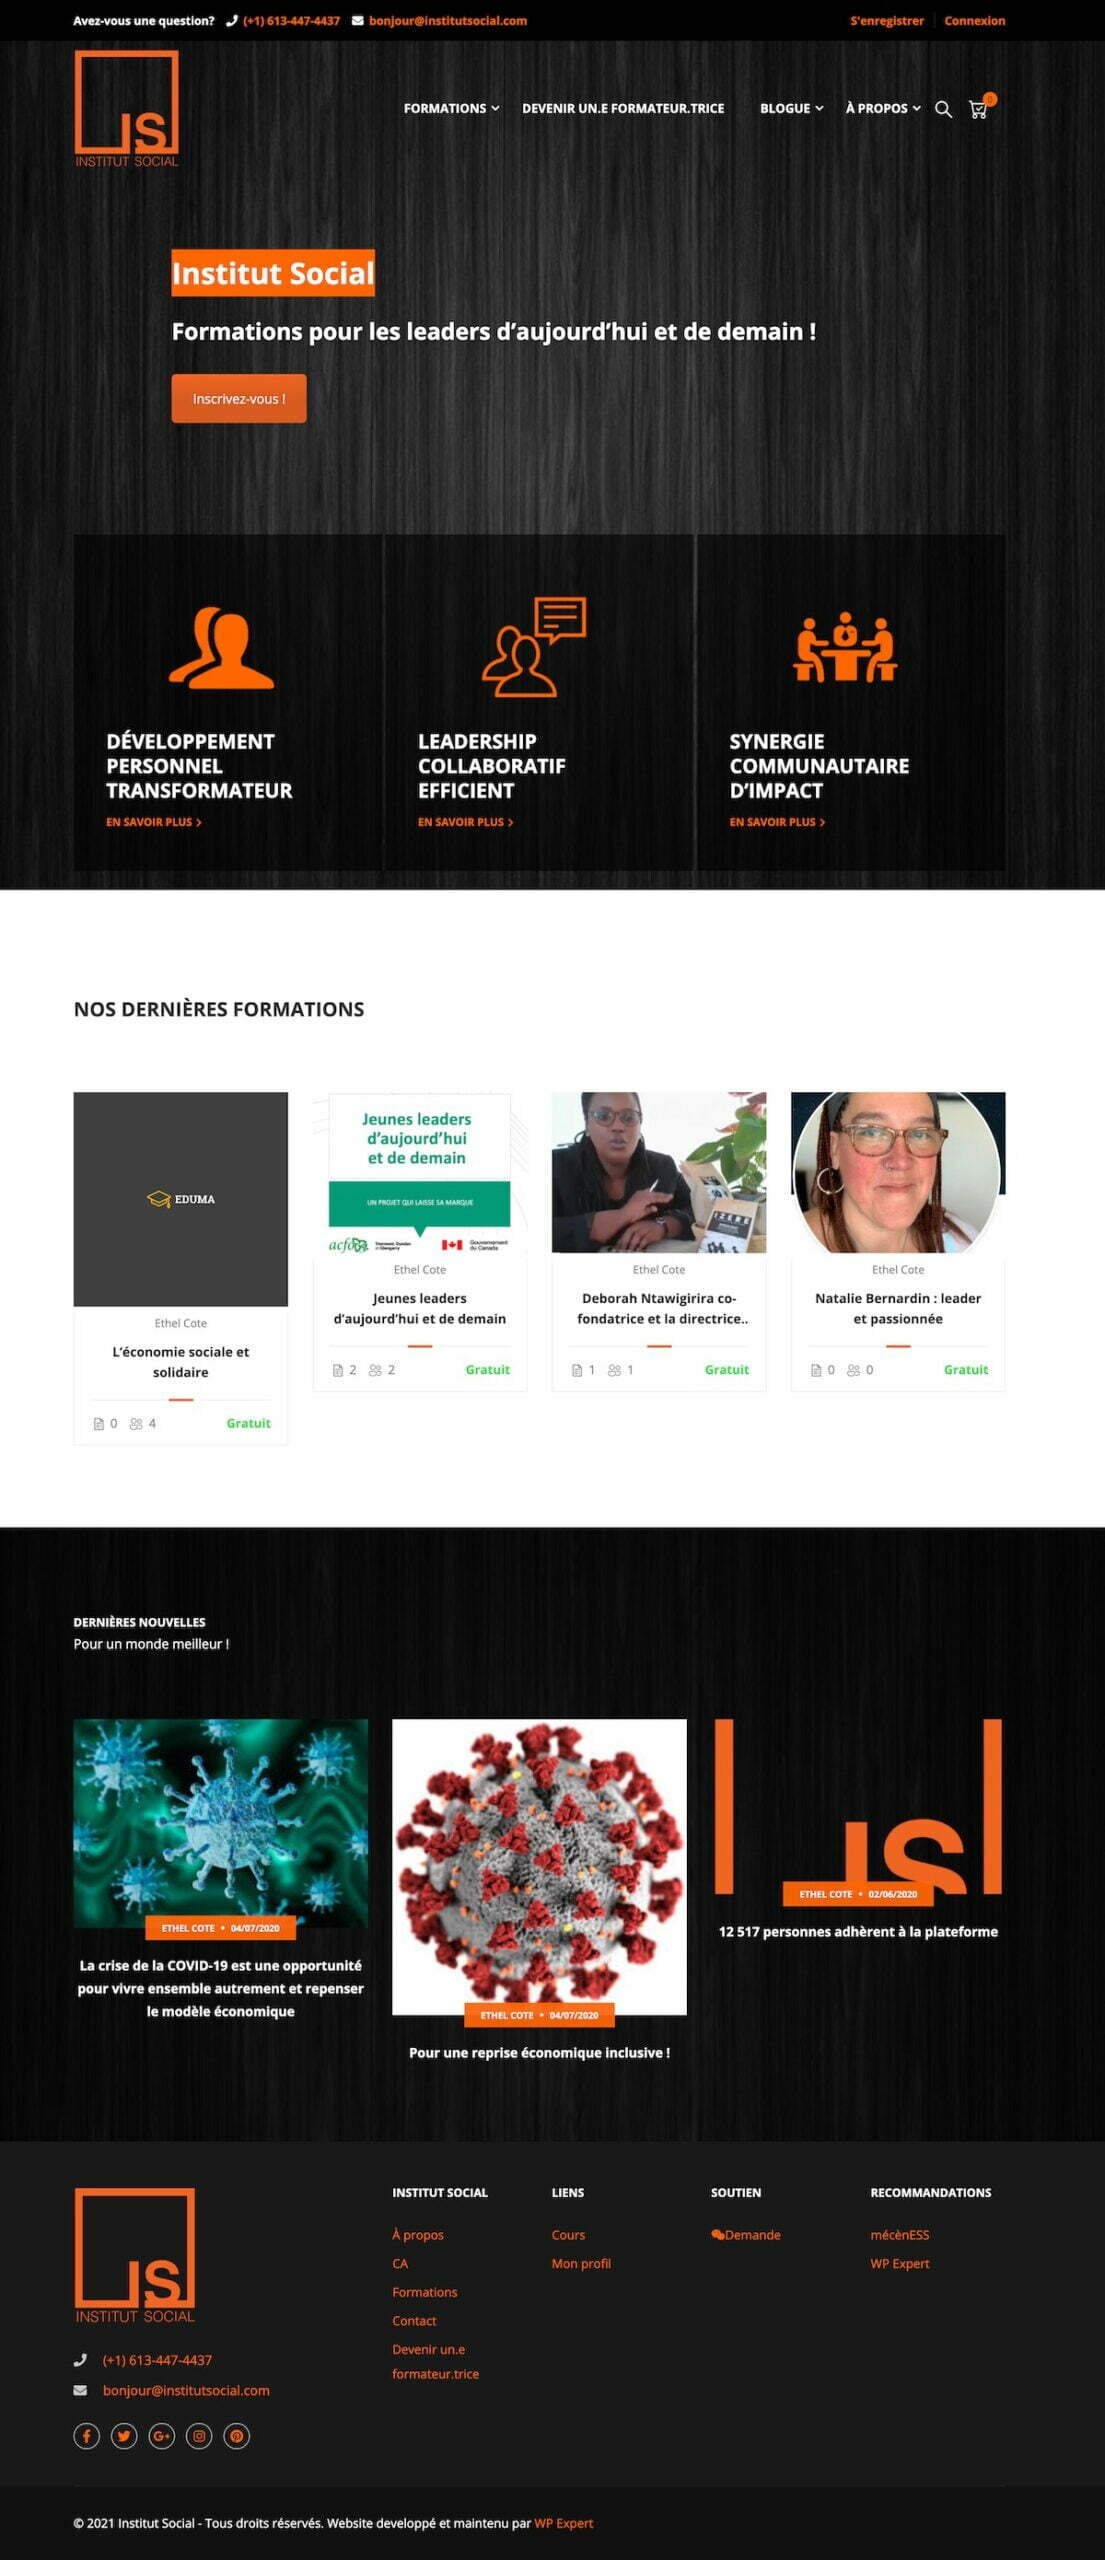 A Screen capture of the institutsocial.com website